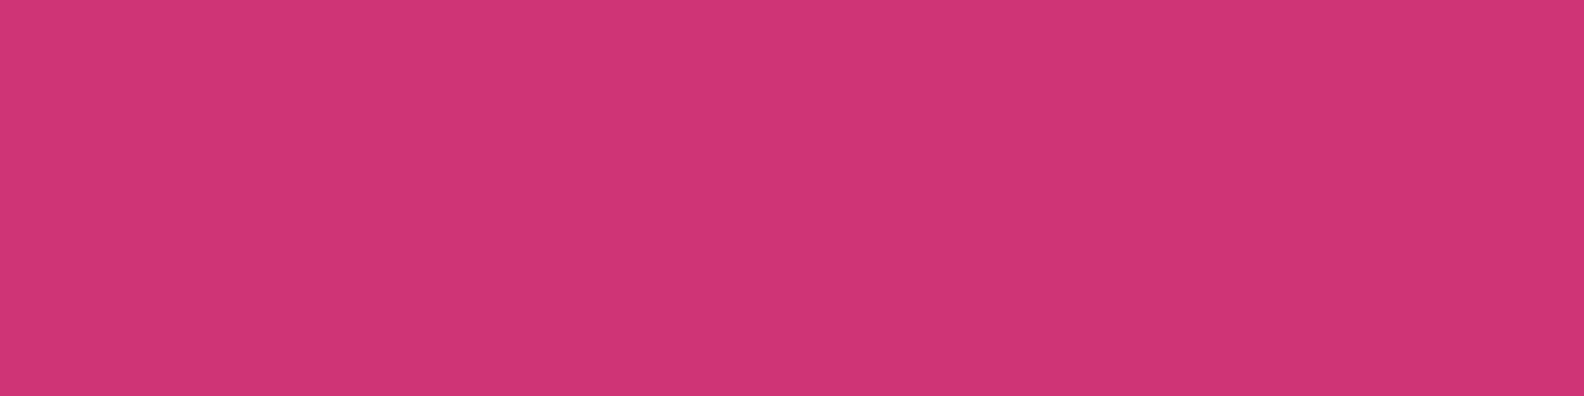 1584x396 Telemagenta Solid Color Background